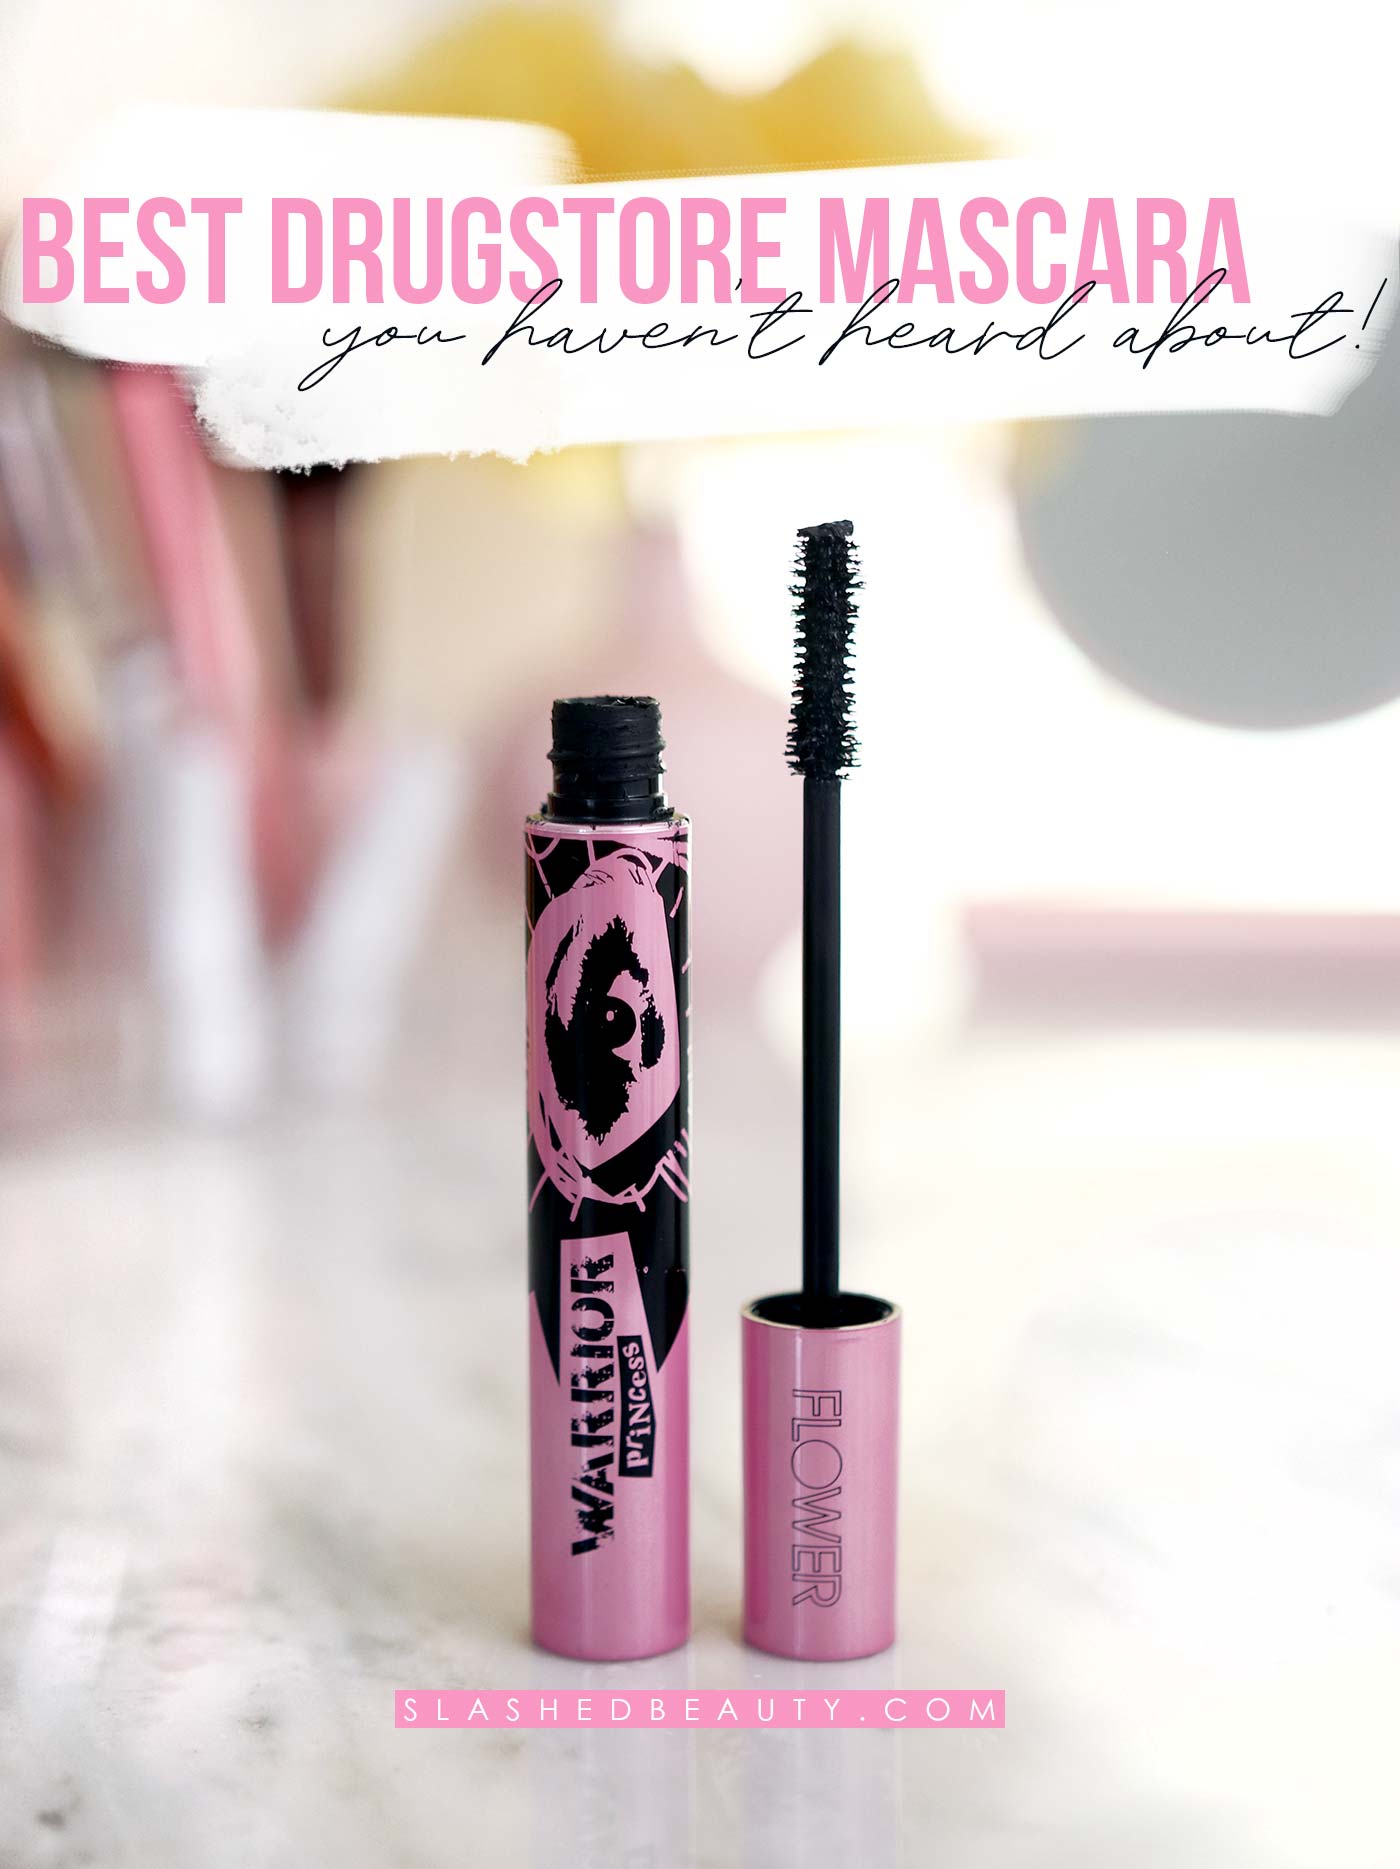 New Pick for Best Drugstore Mascara: Flower Beauty Warrior Princess Mascara Review | Slashed Beauty